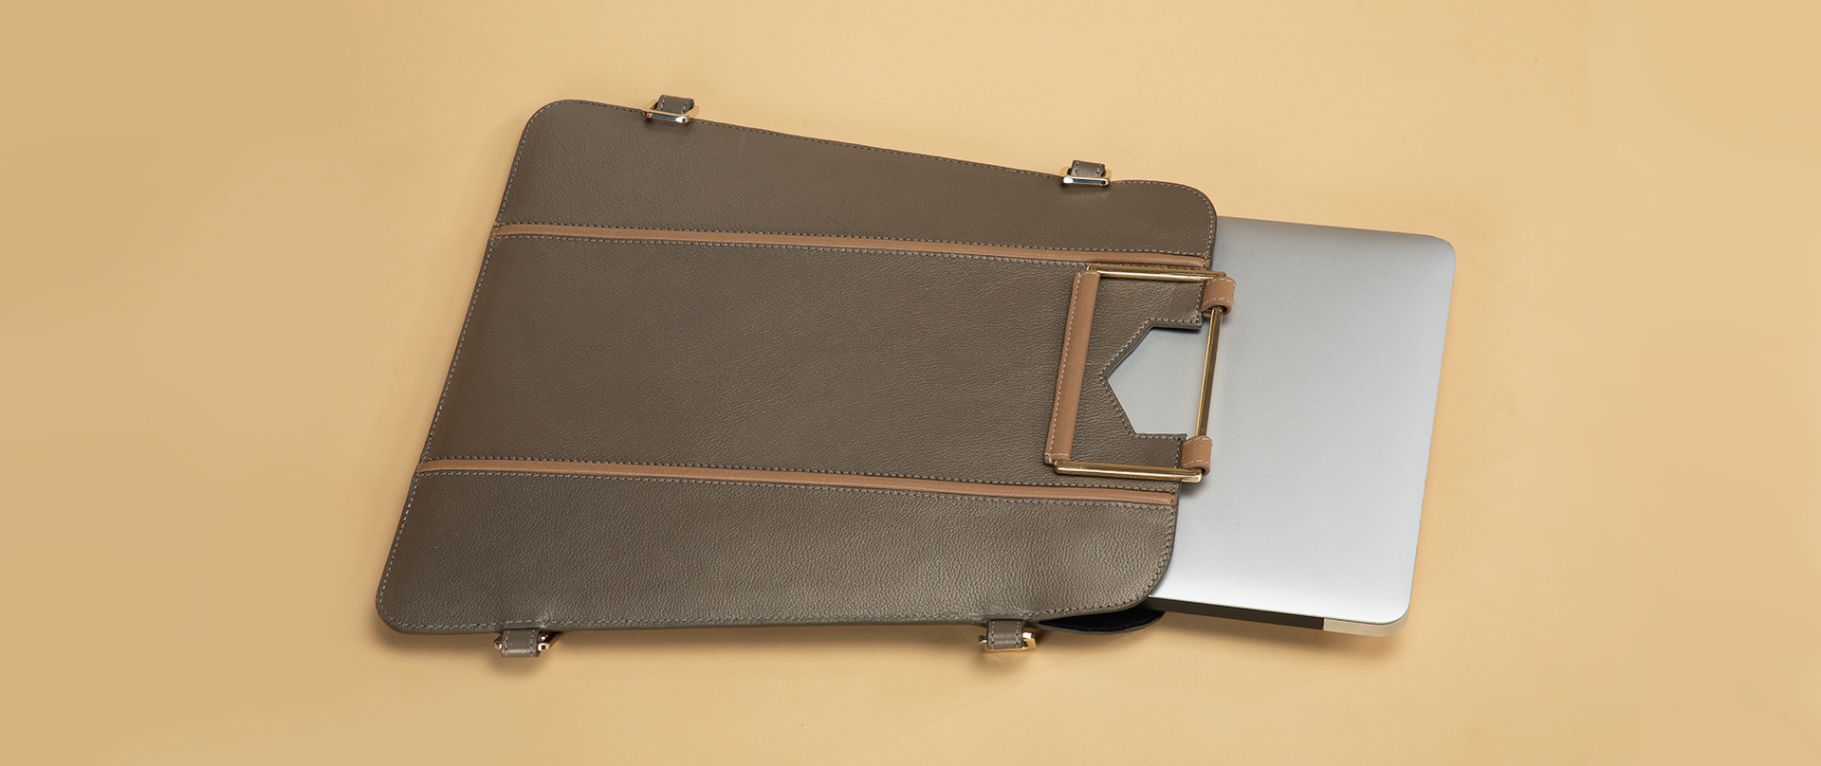 Triad Laptop Bag in Metallic Copper leather